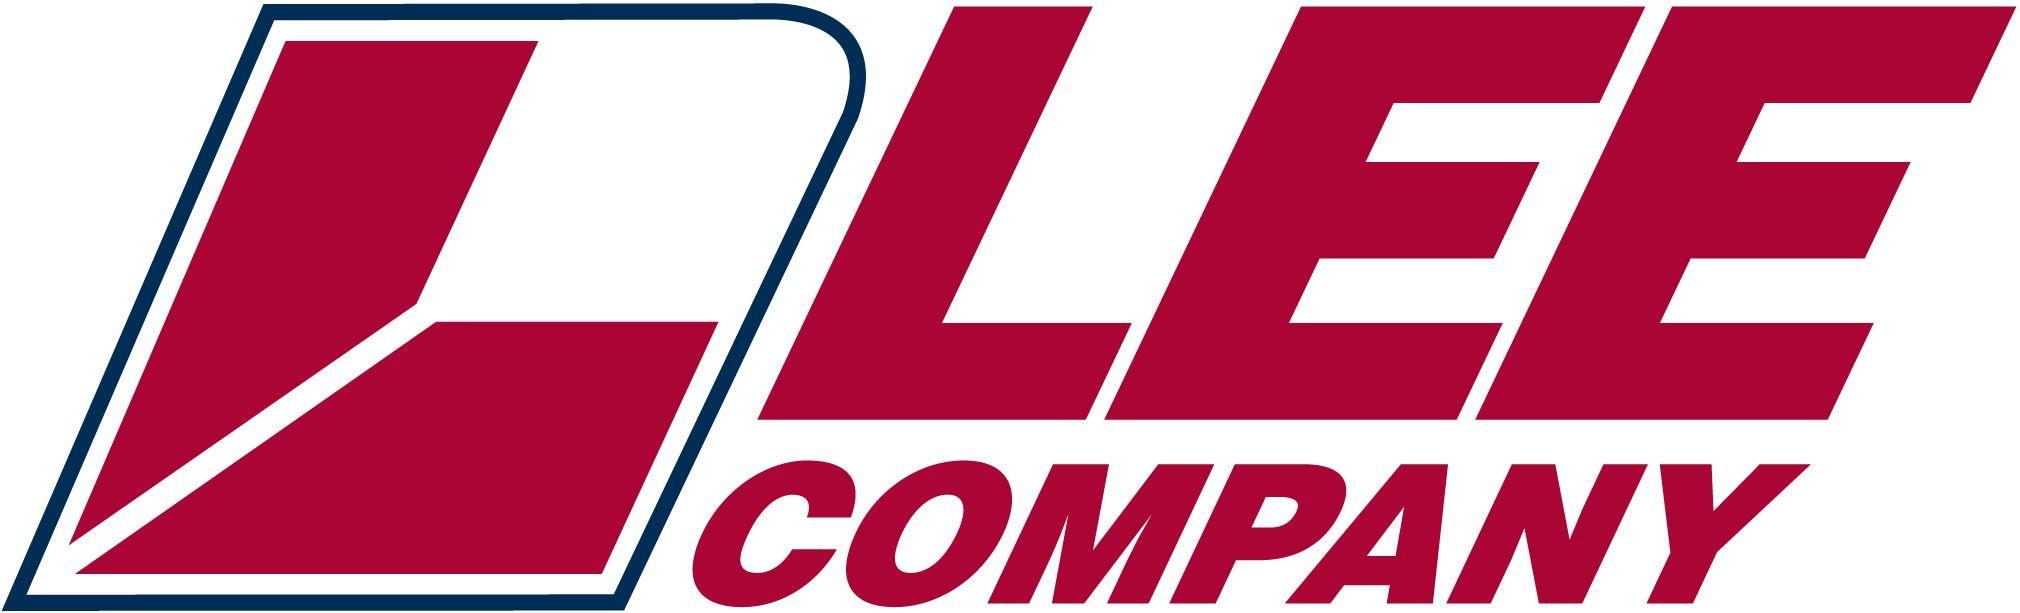 Lee Company Logo - Sponsors